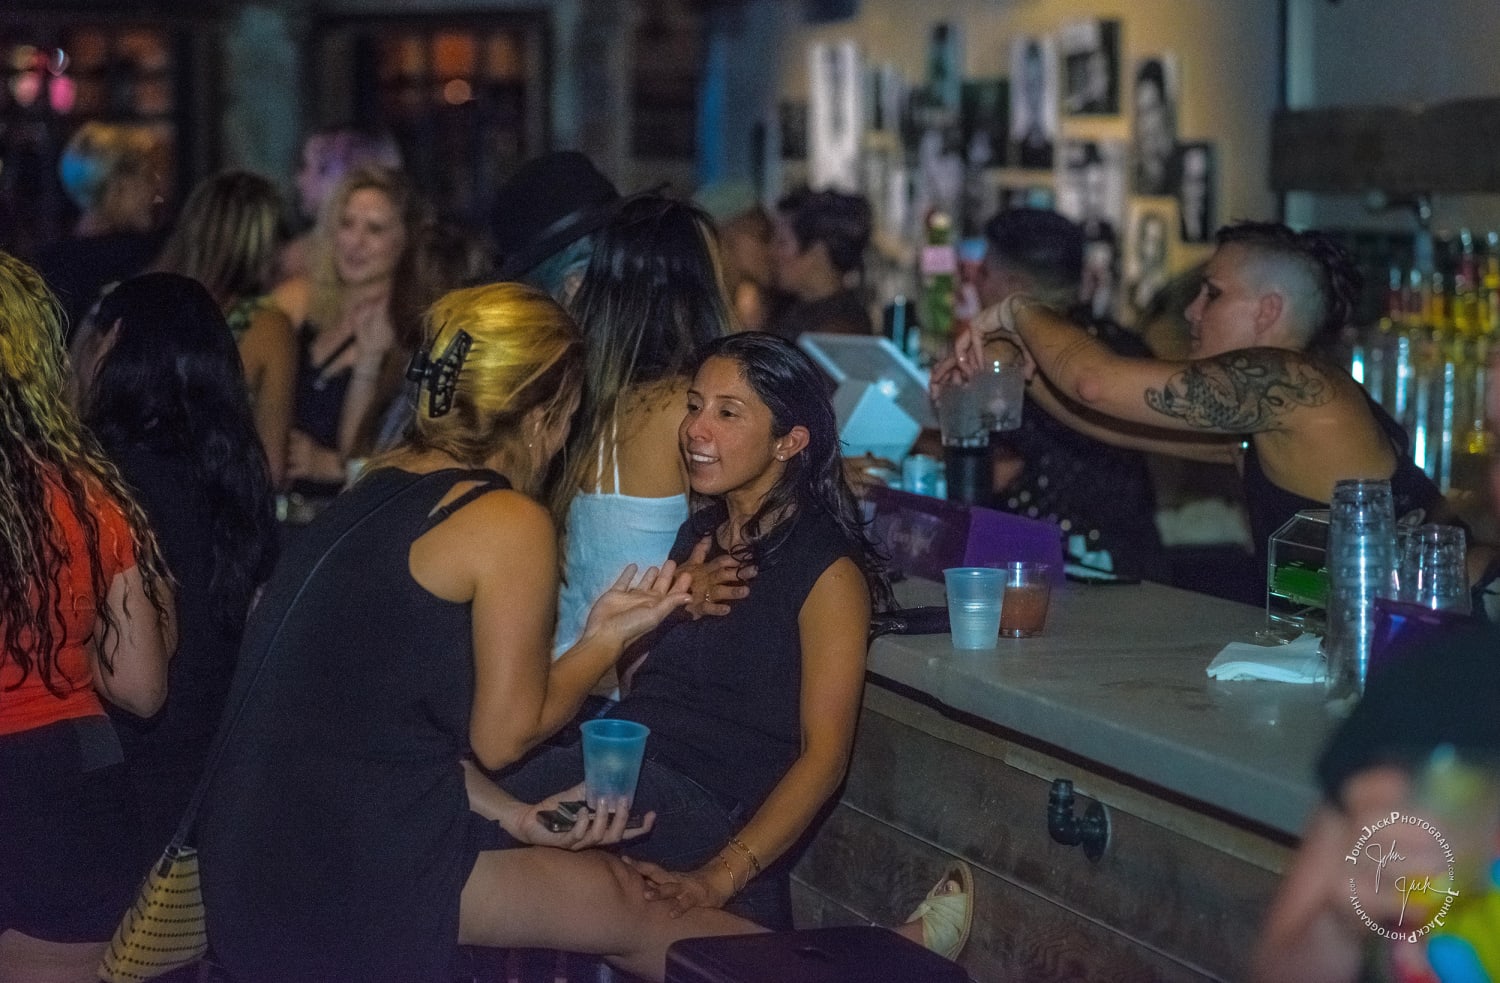 Atlanta bar in lesbian